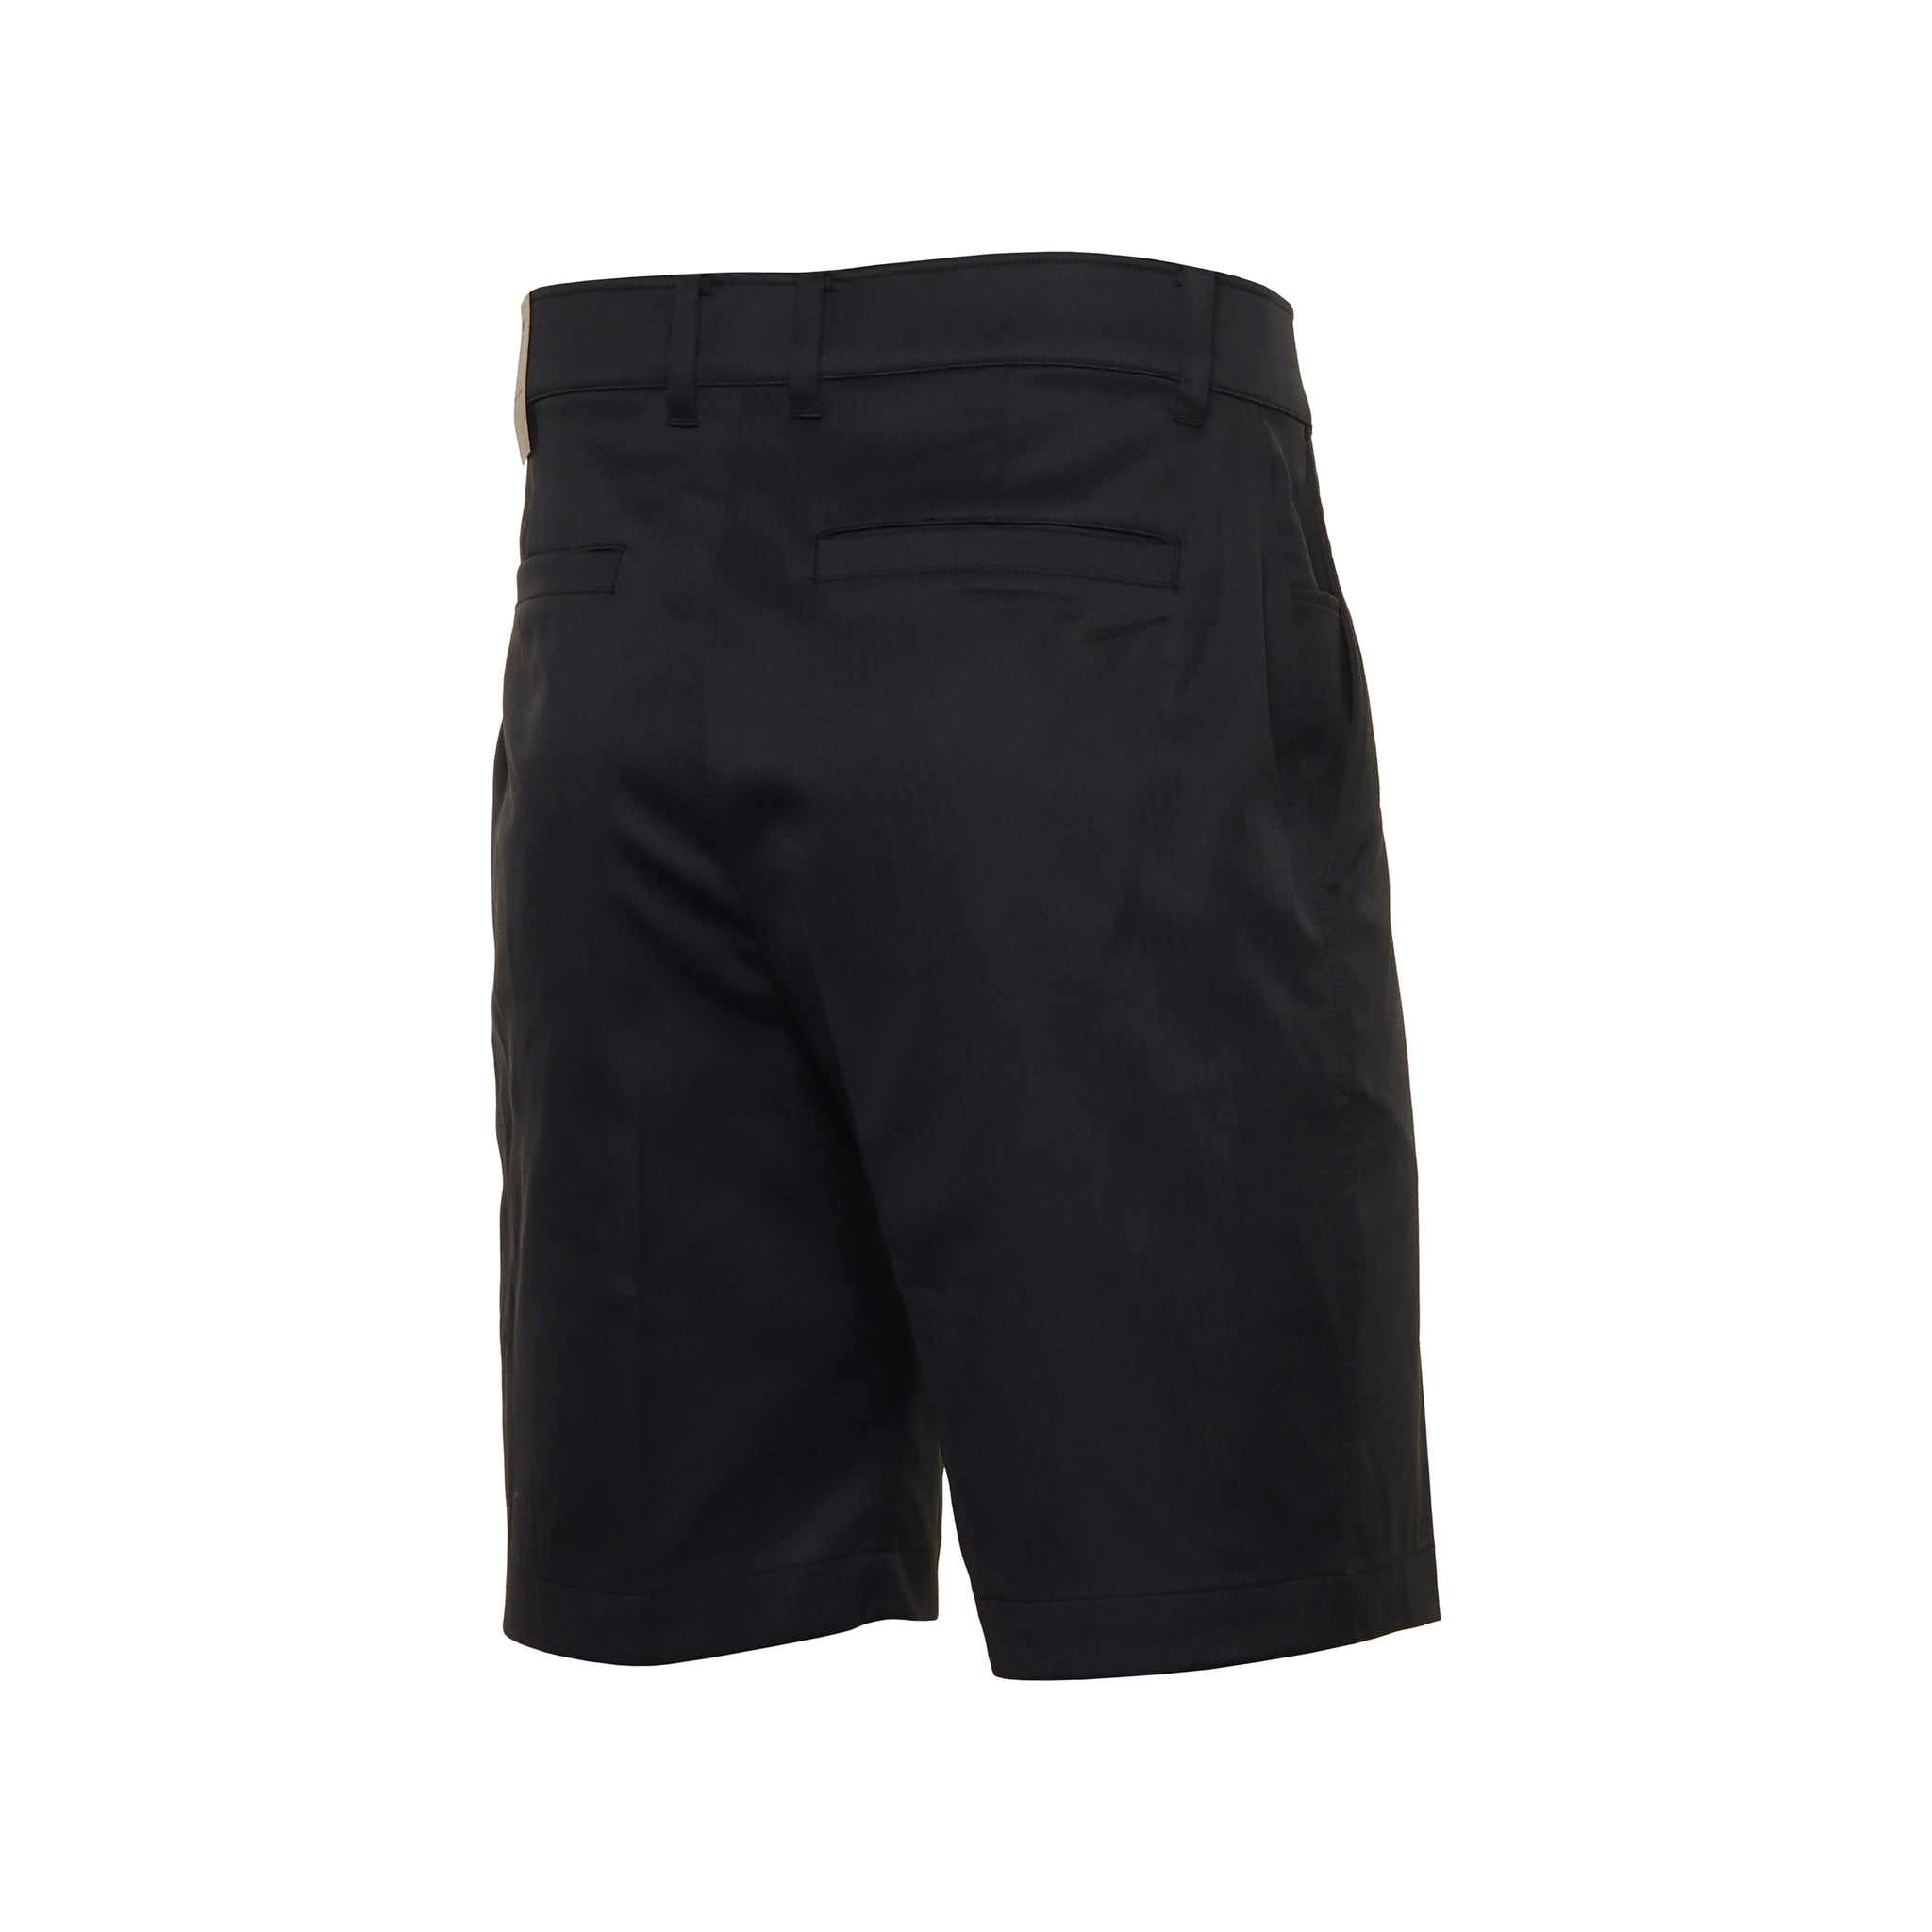 nike-golf-8-tour-chino-shorts-fd5721-010-black